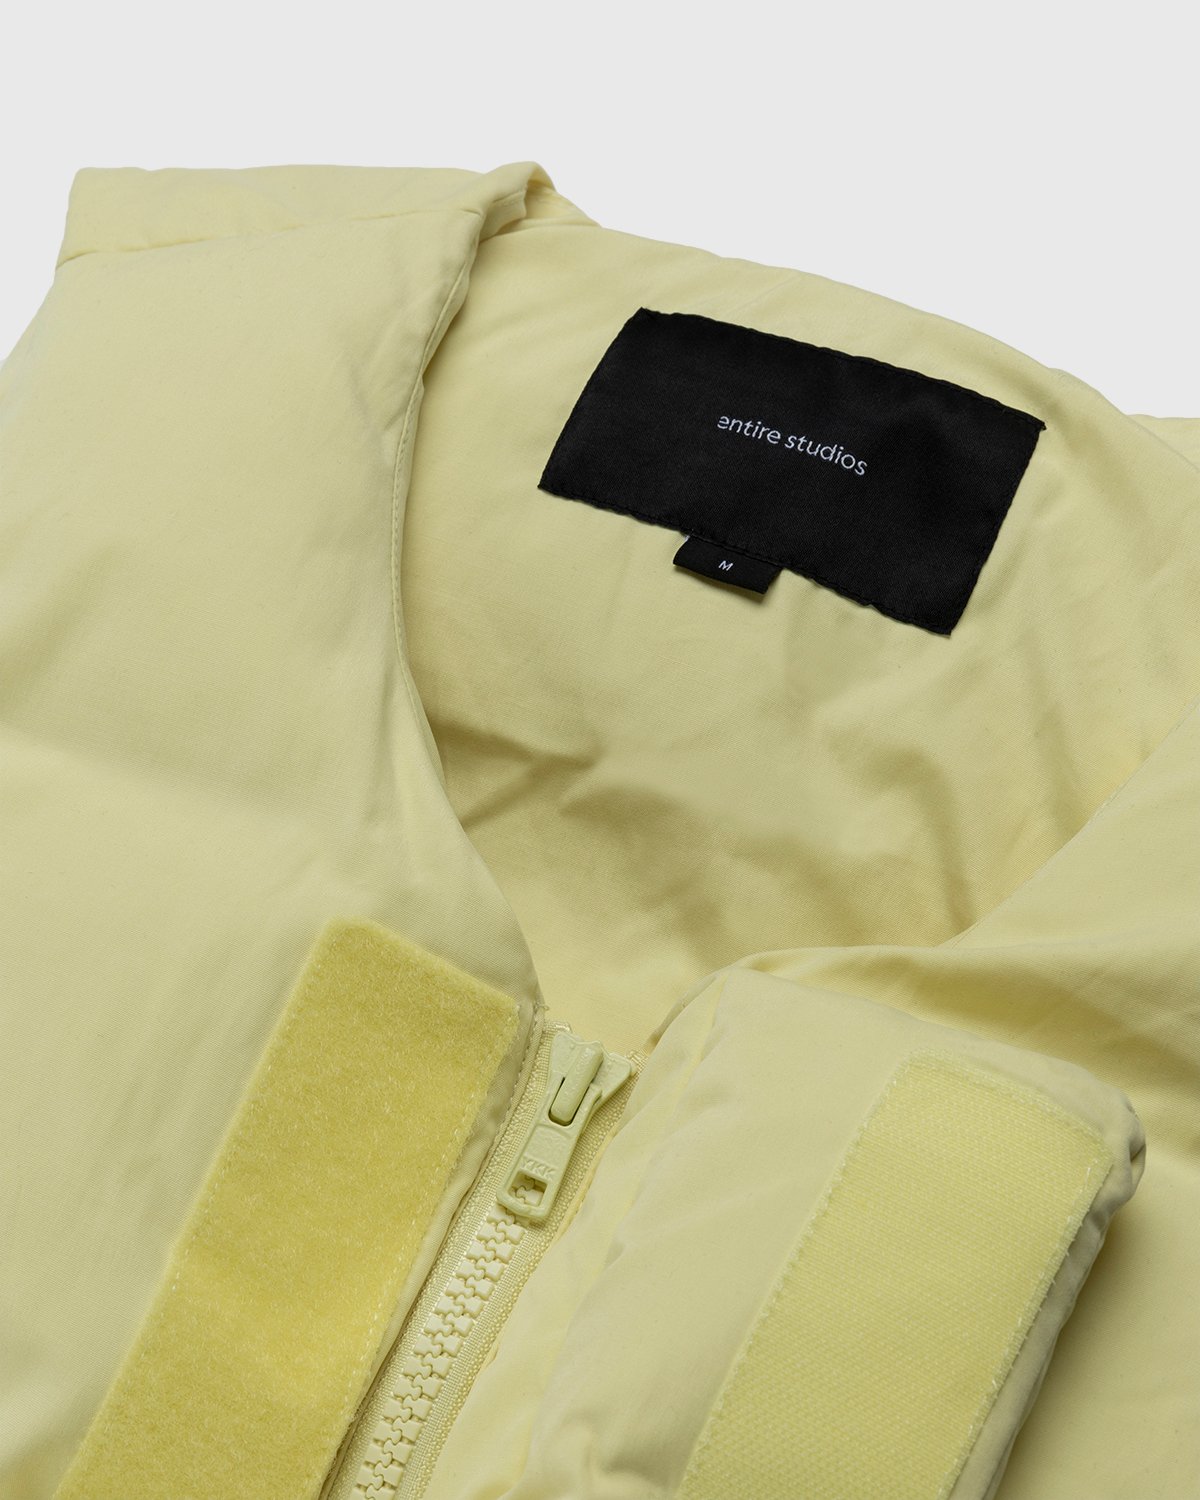 Entire Studios - Pillow Vest Blonde - Clothing - Yellow - Image 4